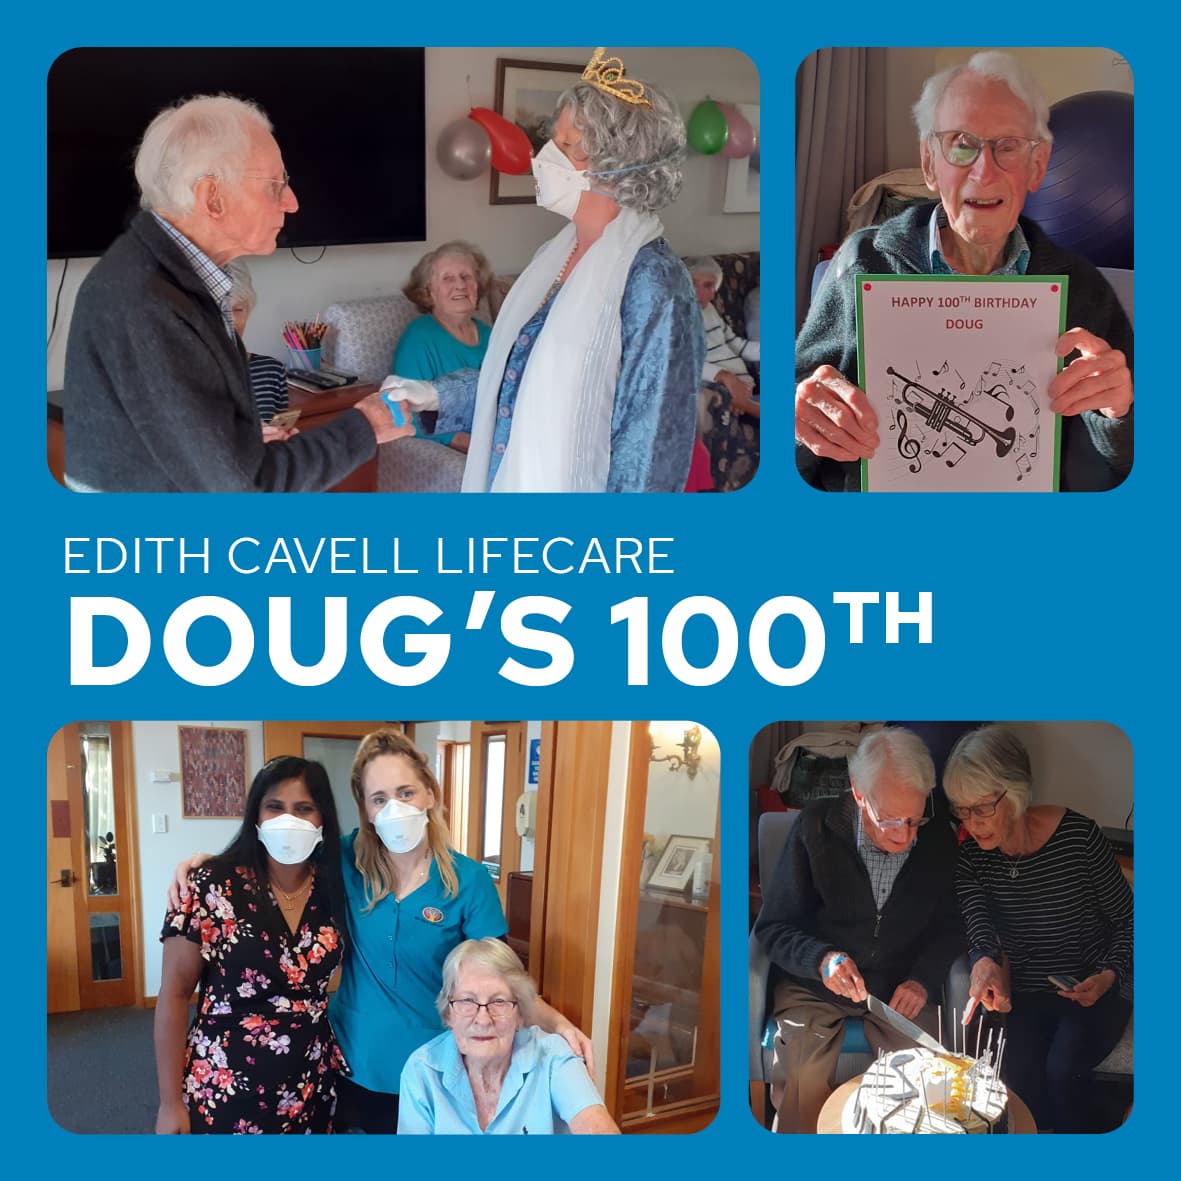 DOUG's 100th